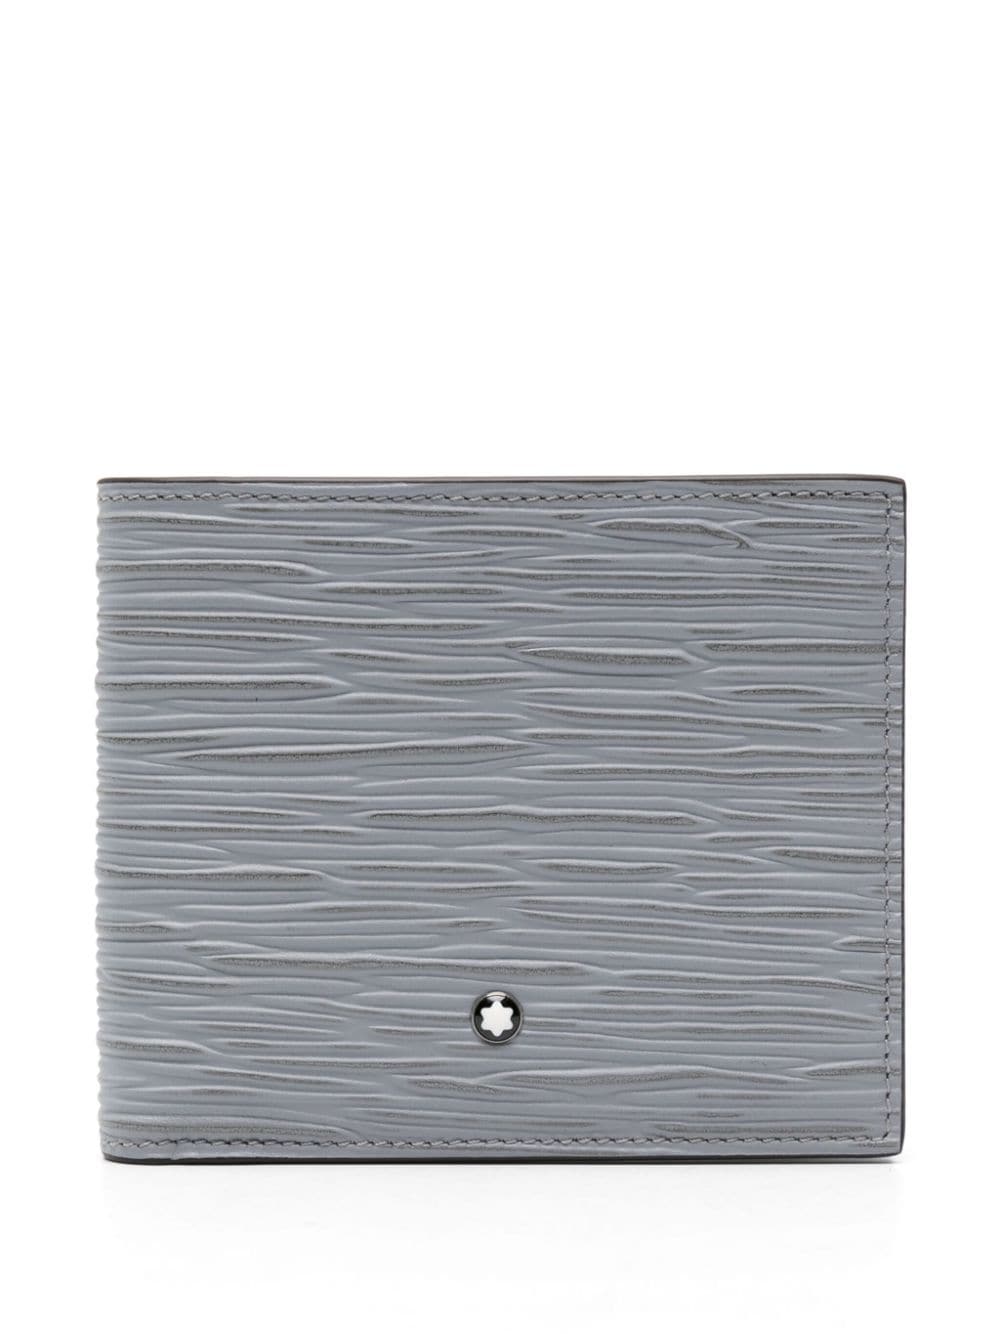 Montblanc 4810 leather wallet - Grau